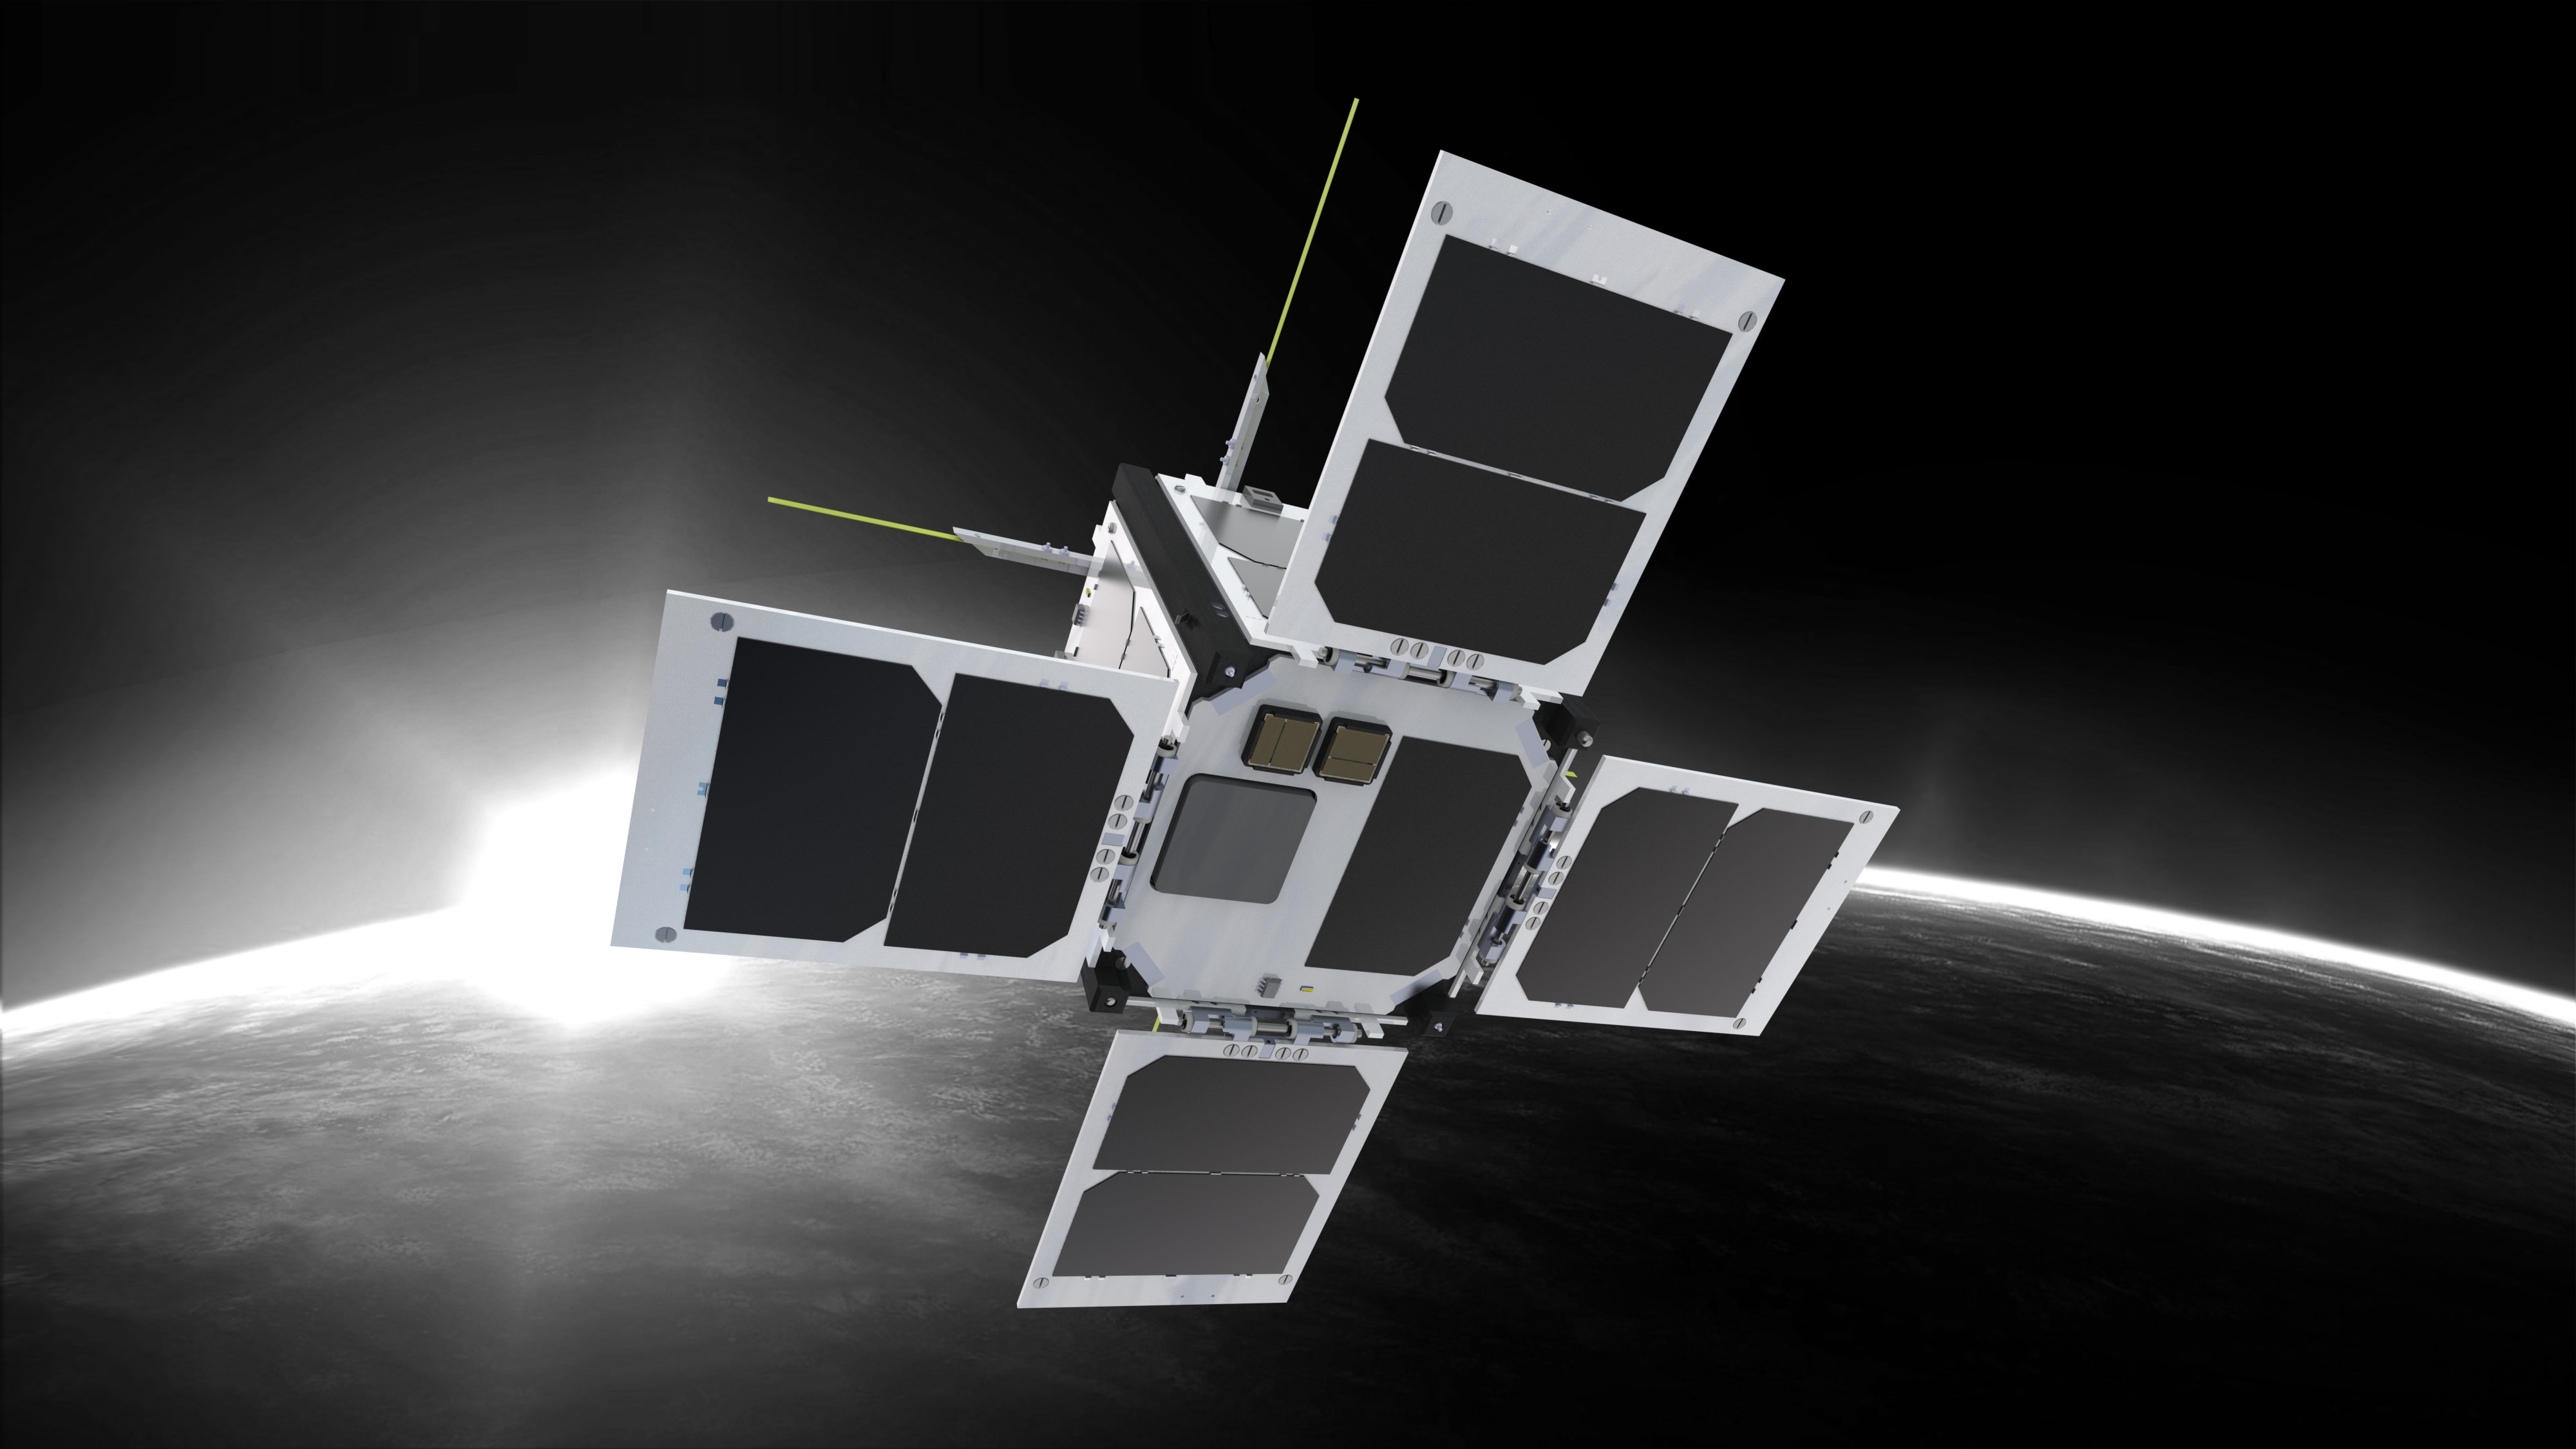 Space agency uses Raspberry Pi to solve satellite 